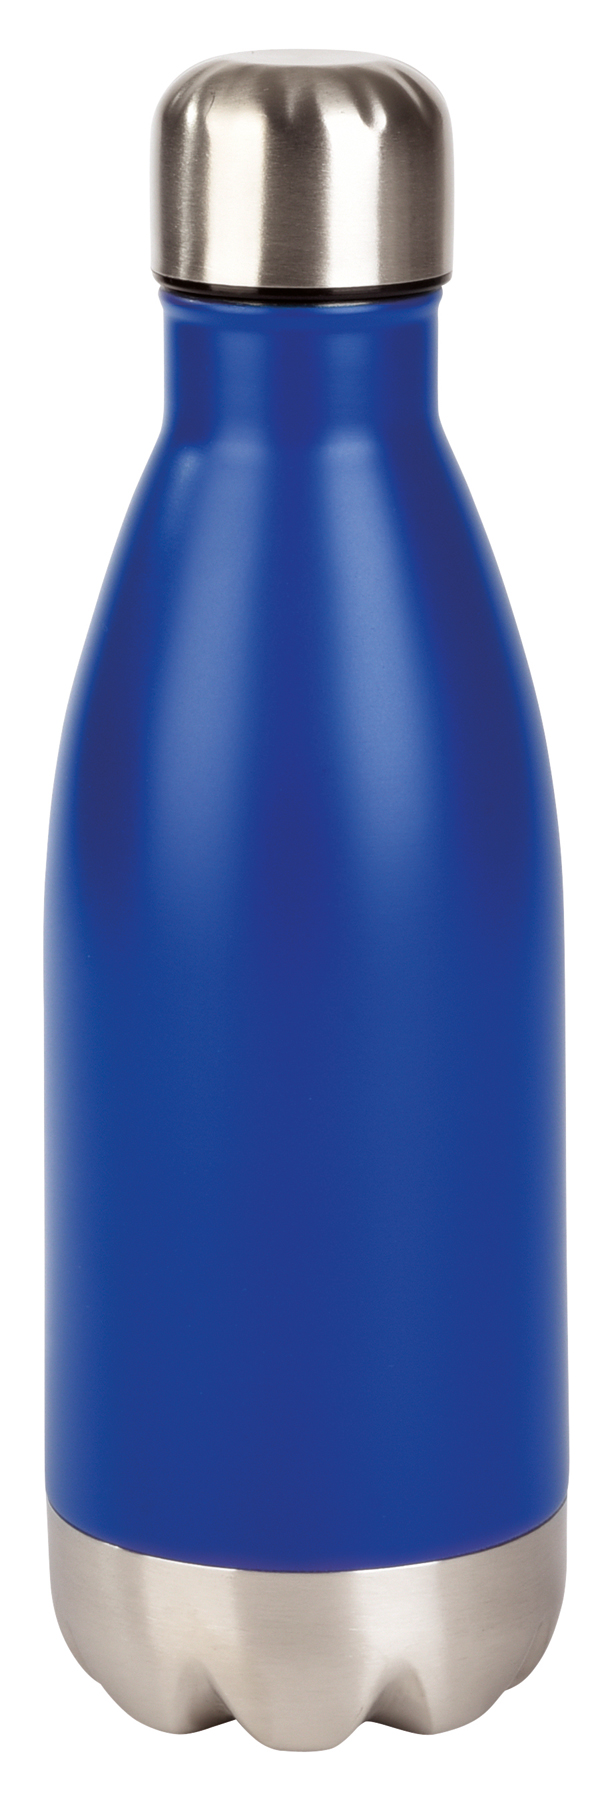 Travel flask PARKY - blue